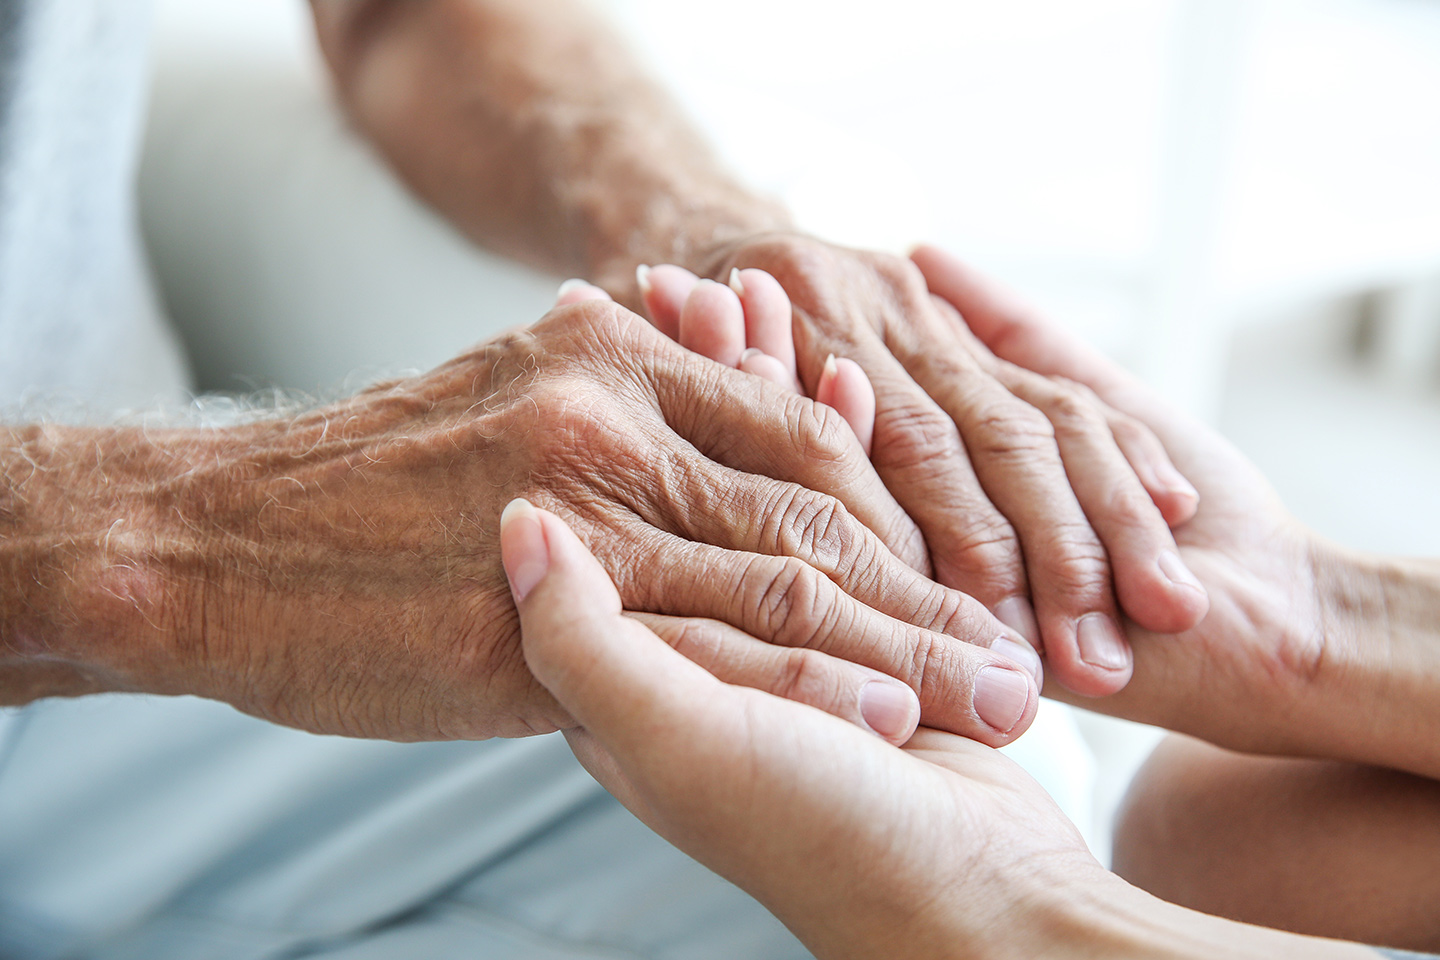 Recognizing Elder Abuse on National Seniors Day